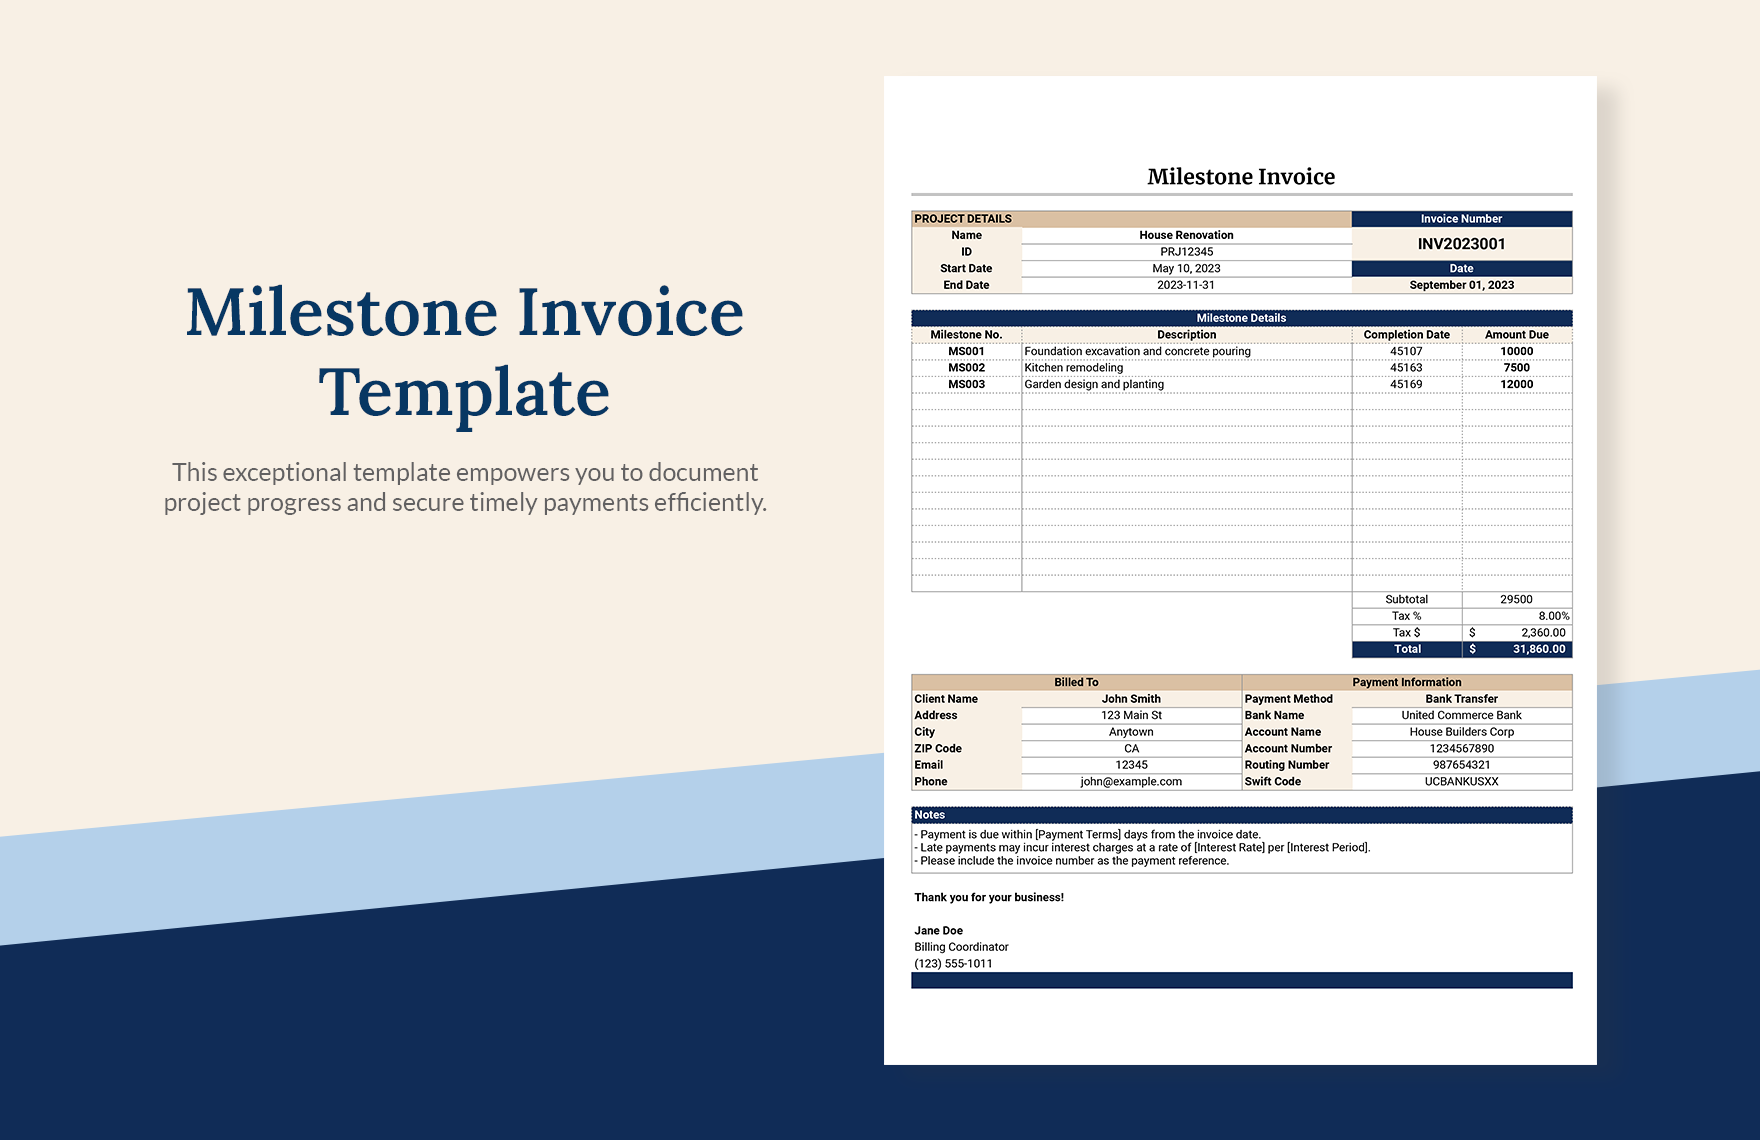 Milestone Invoice Template